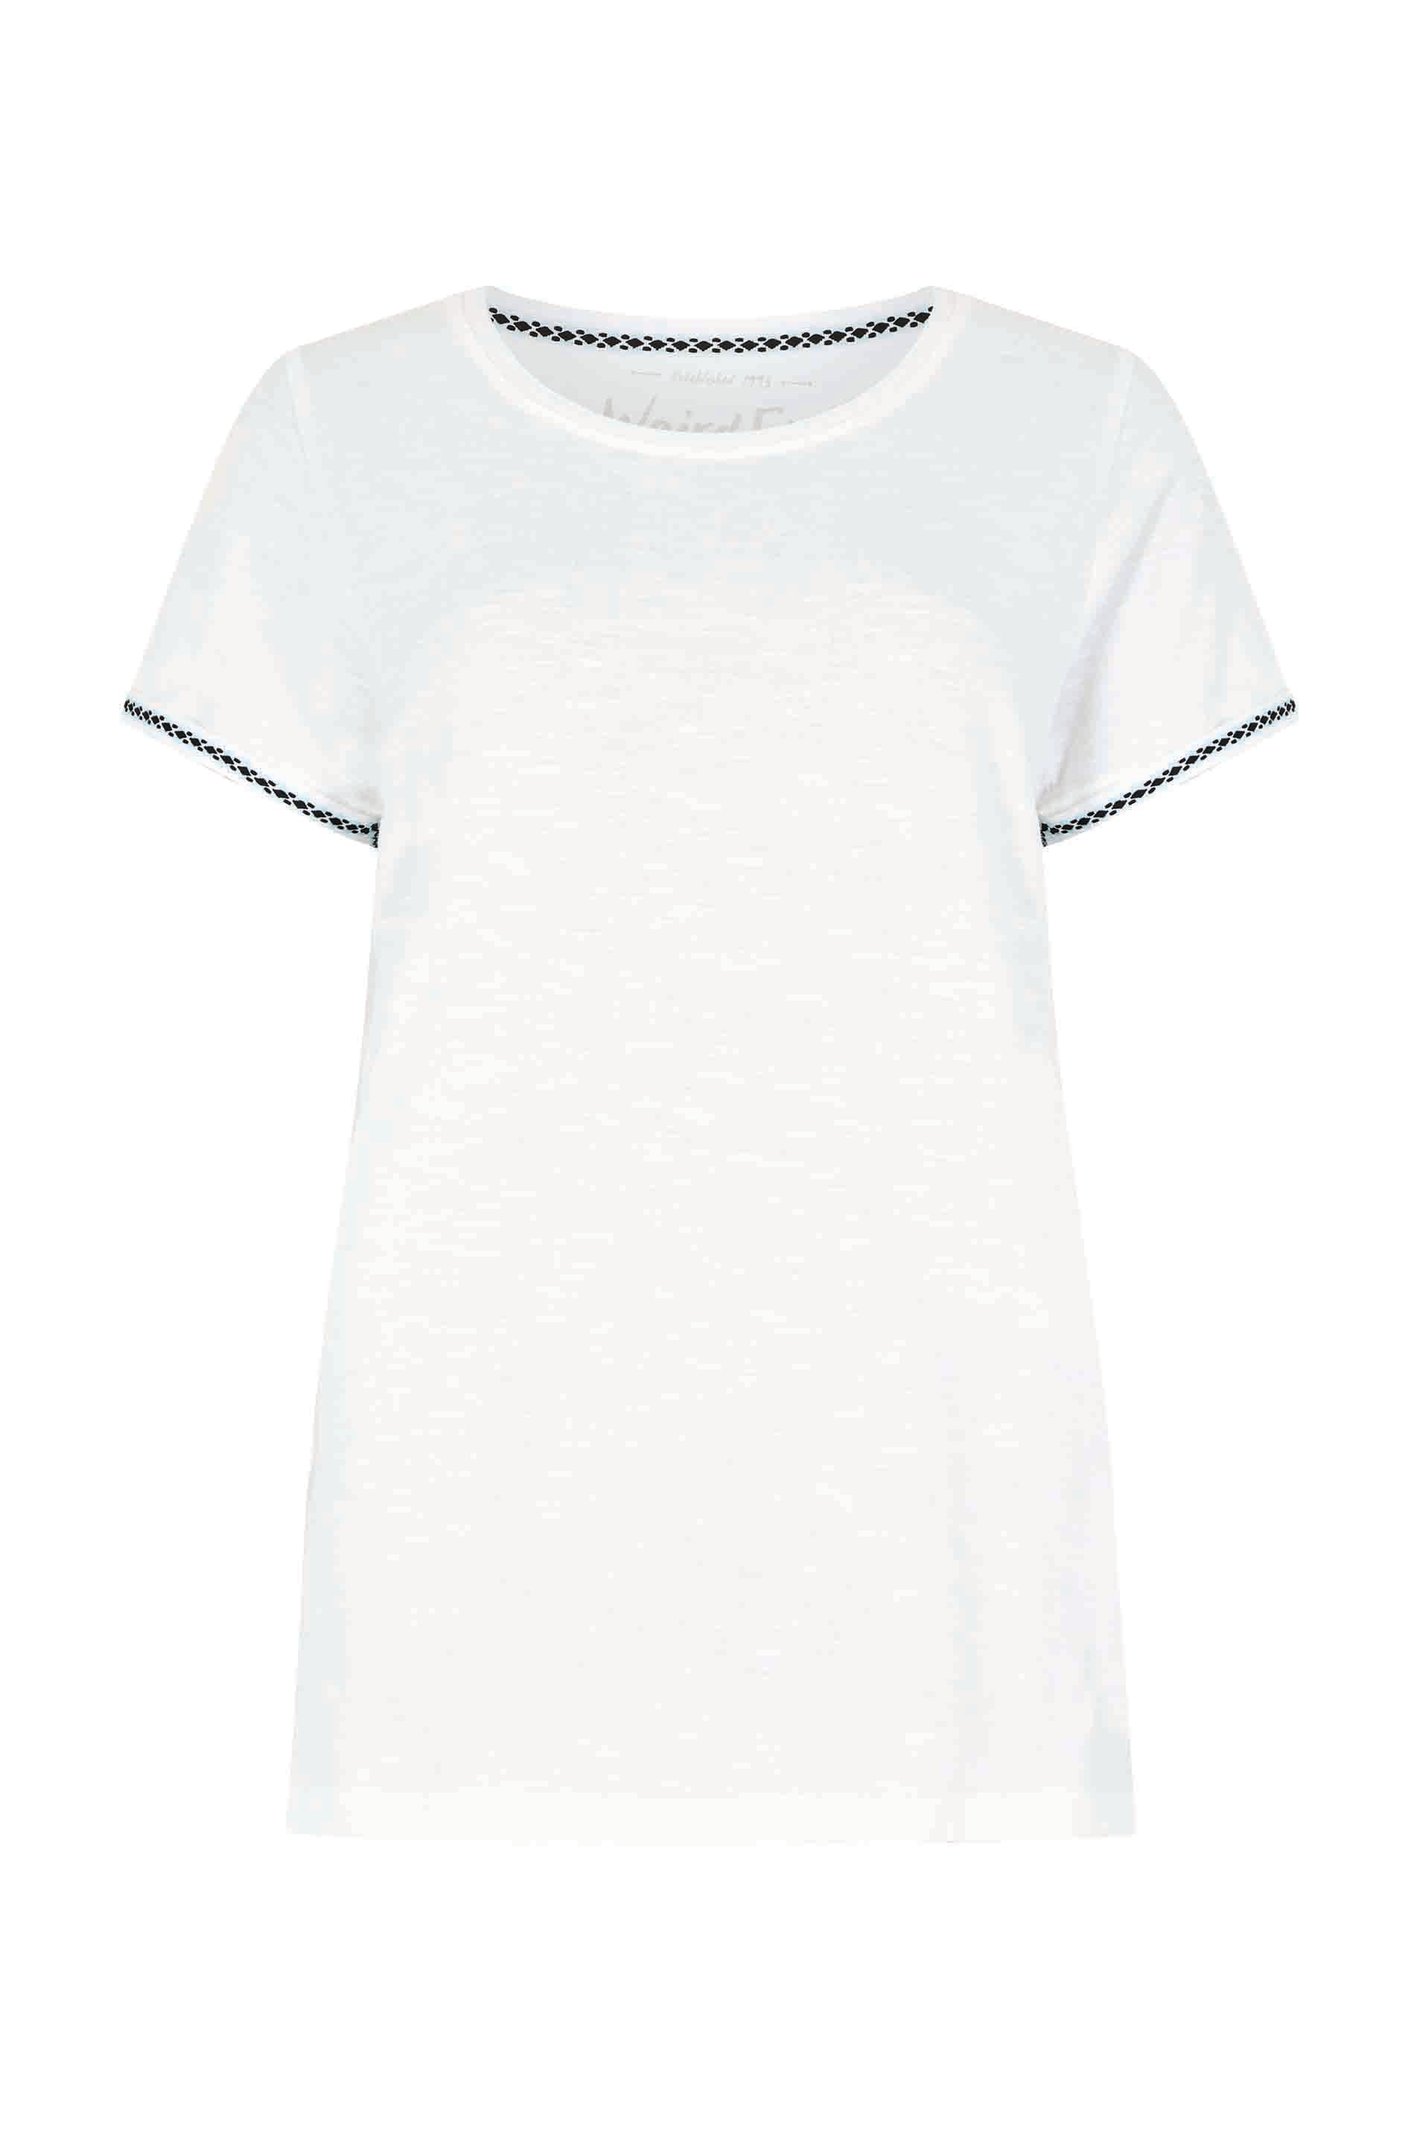 Weird Fish Teya Organic Cotton T-Shirt White Size 16